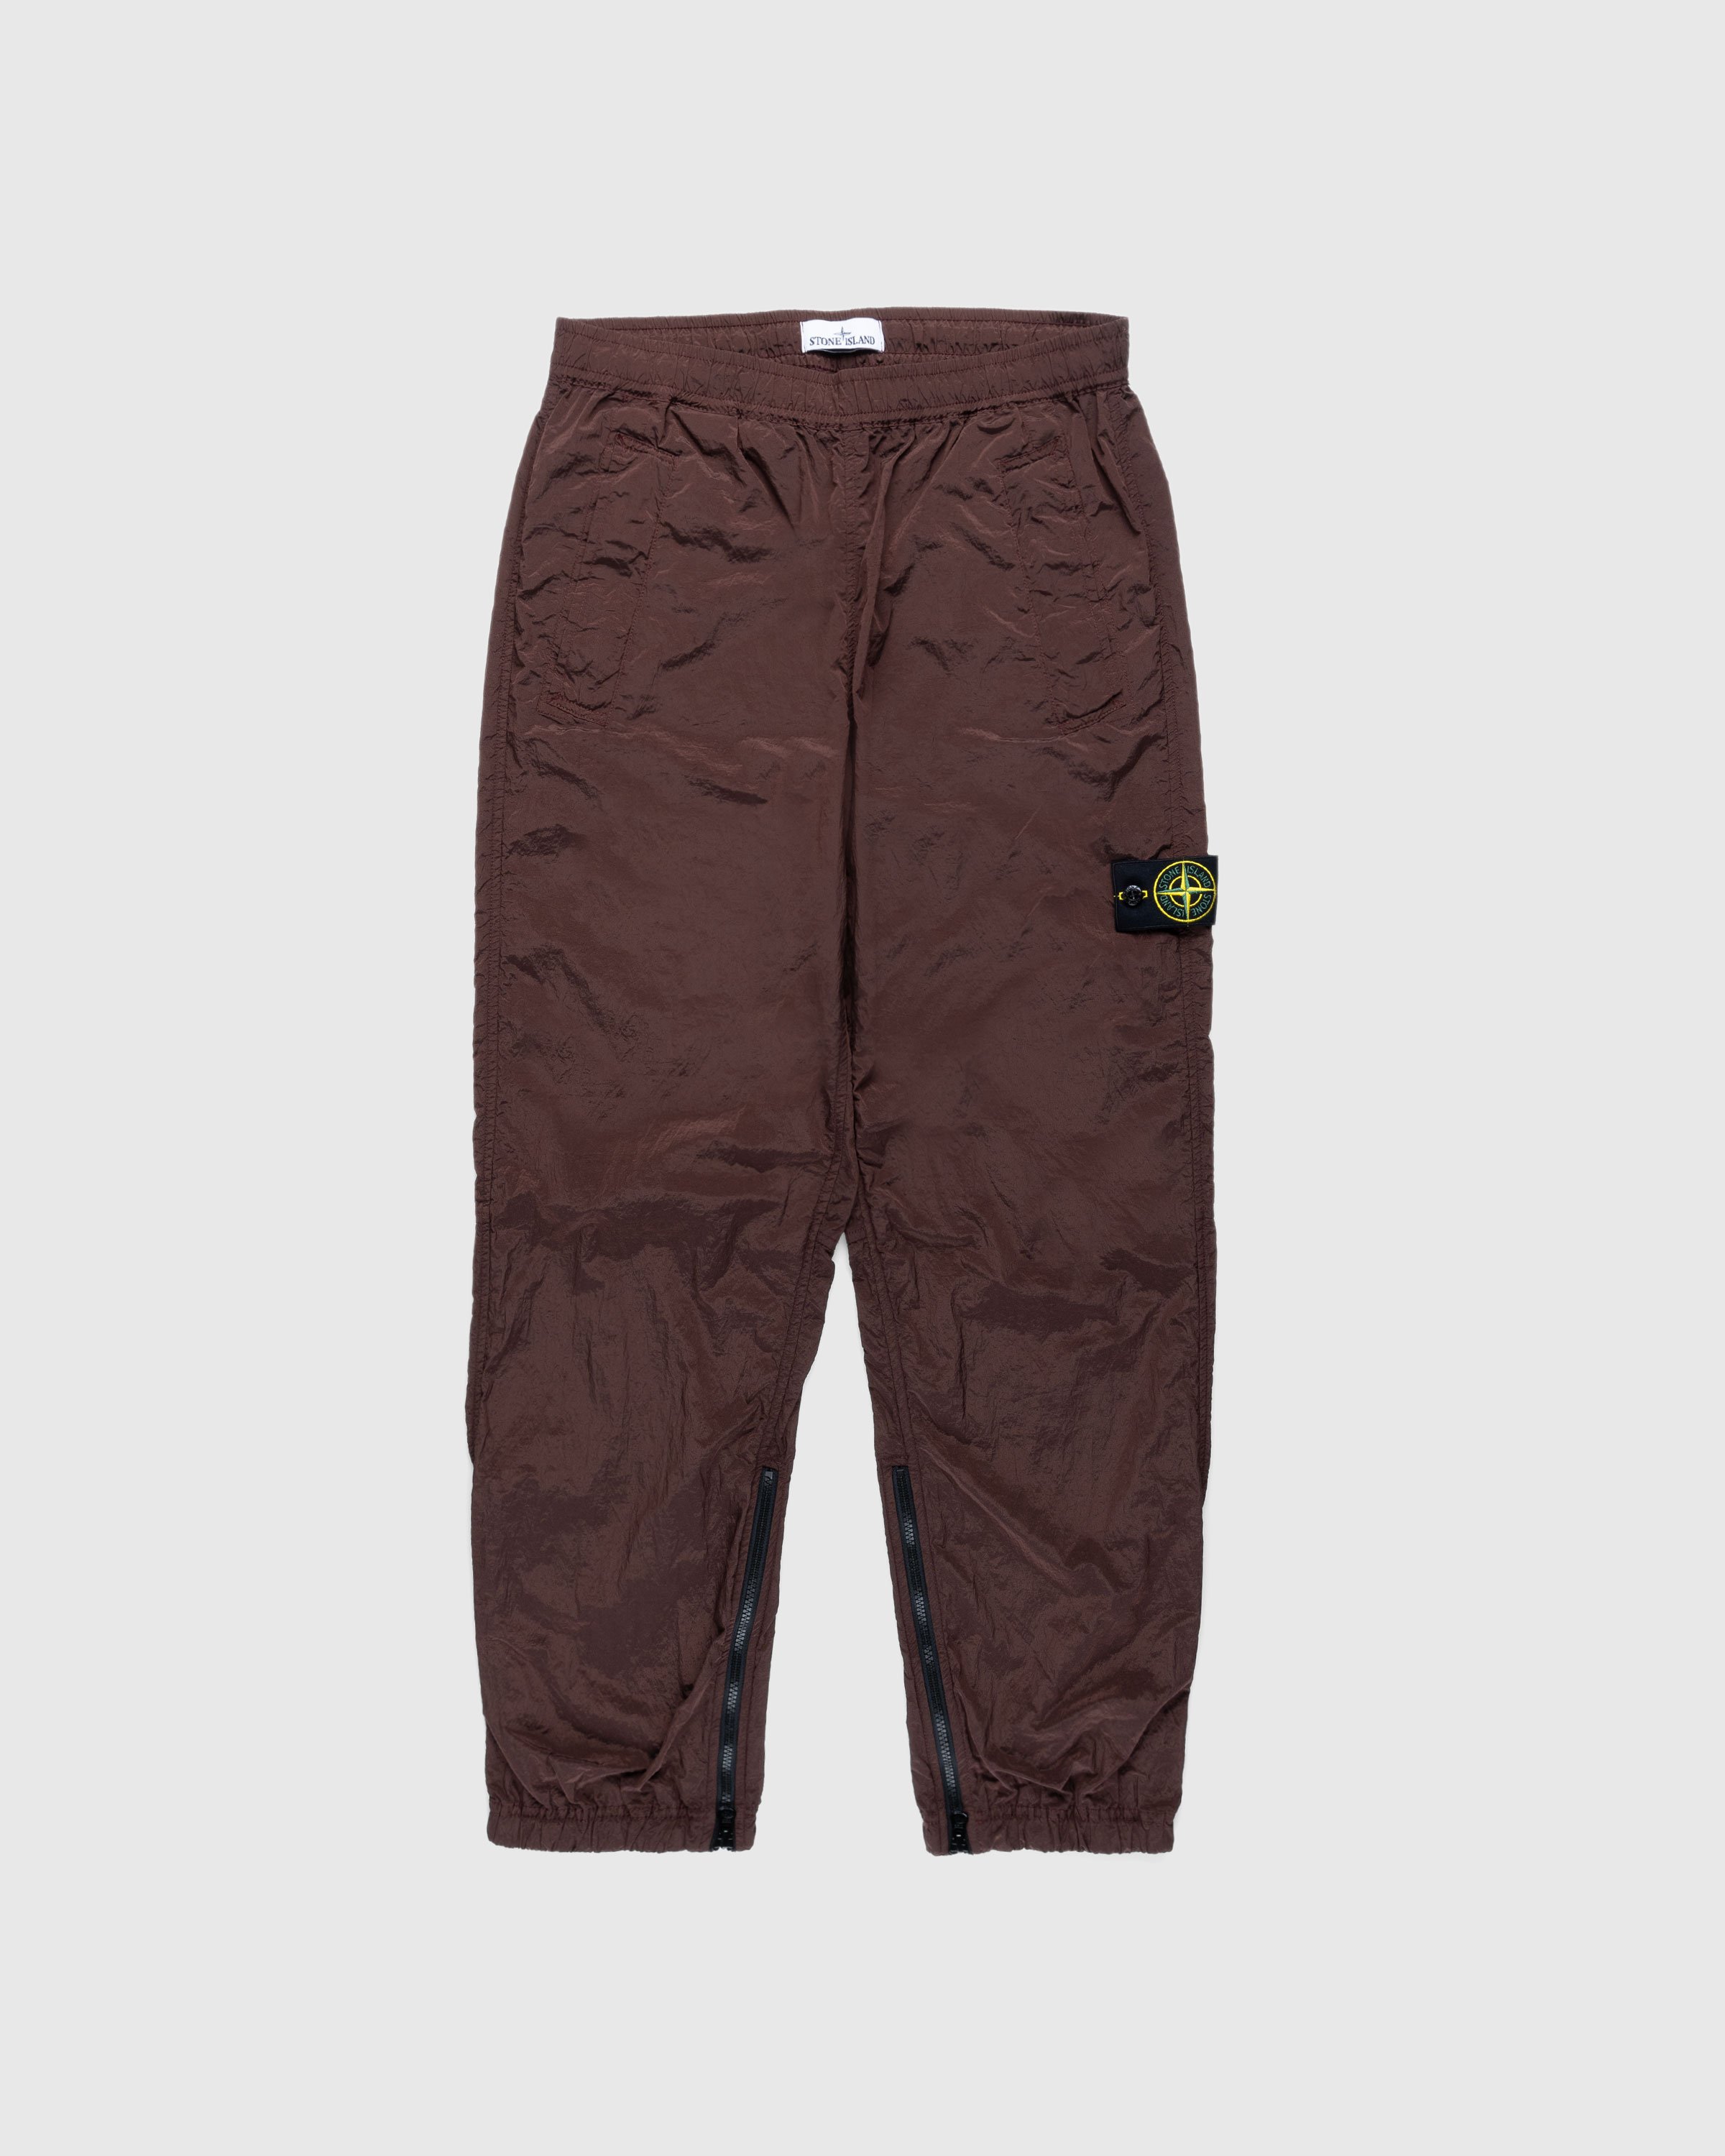 Stone Island - Nylon Metal Pants Maroon - Clothing - Brown - Image 1